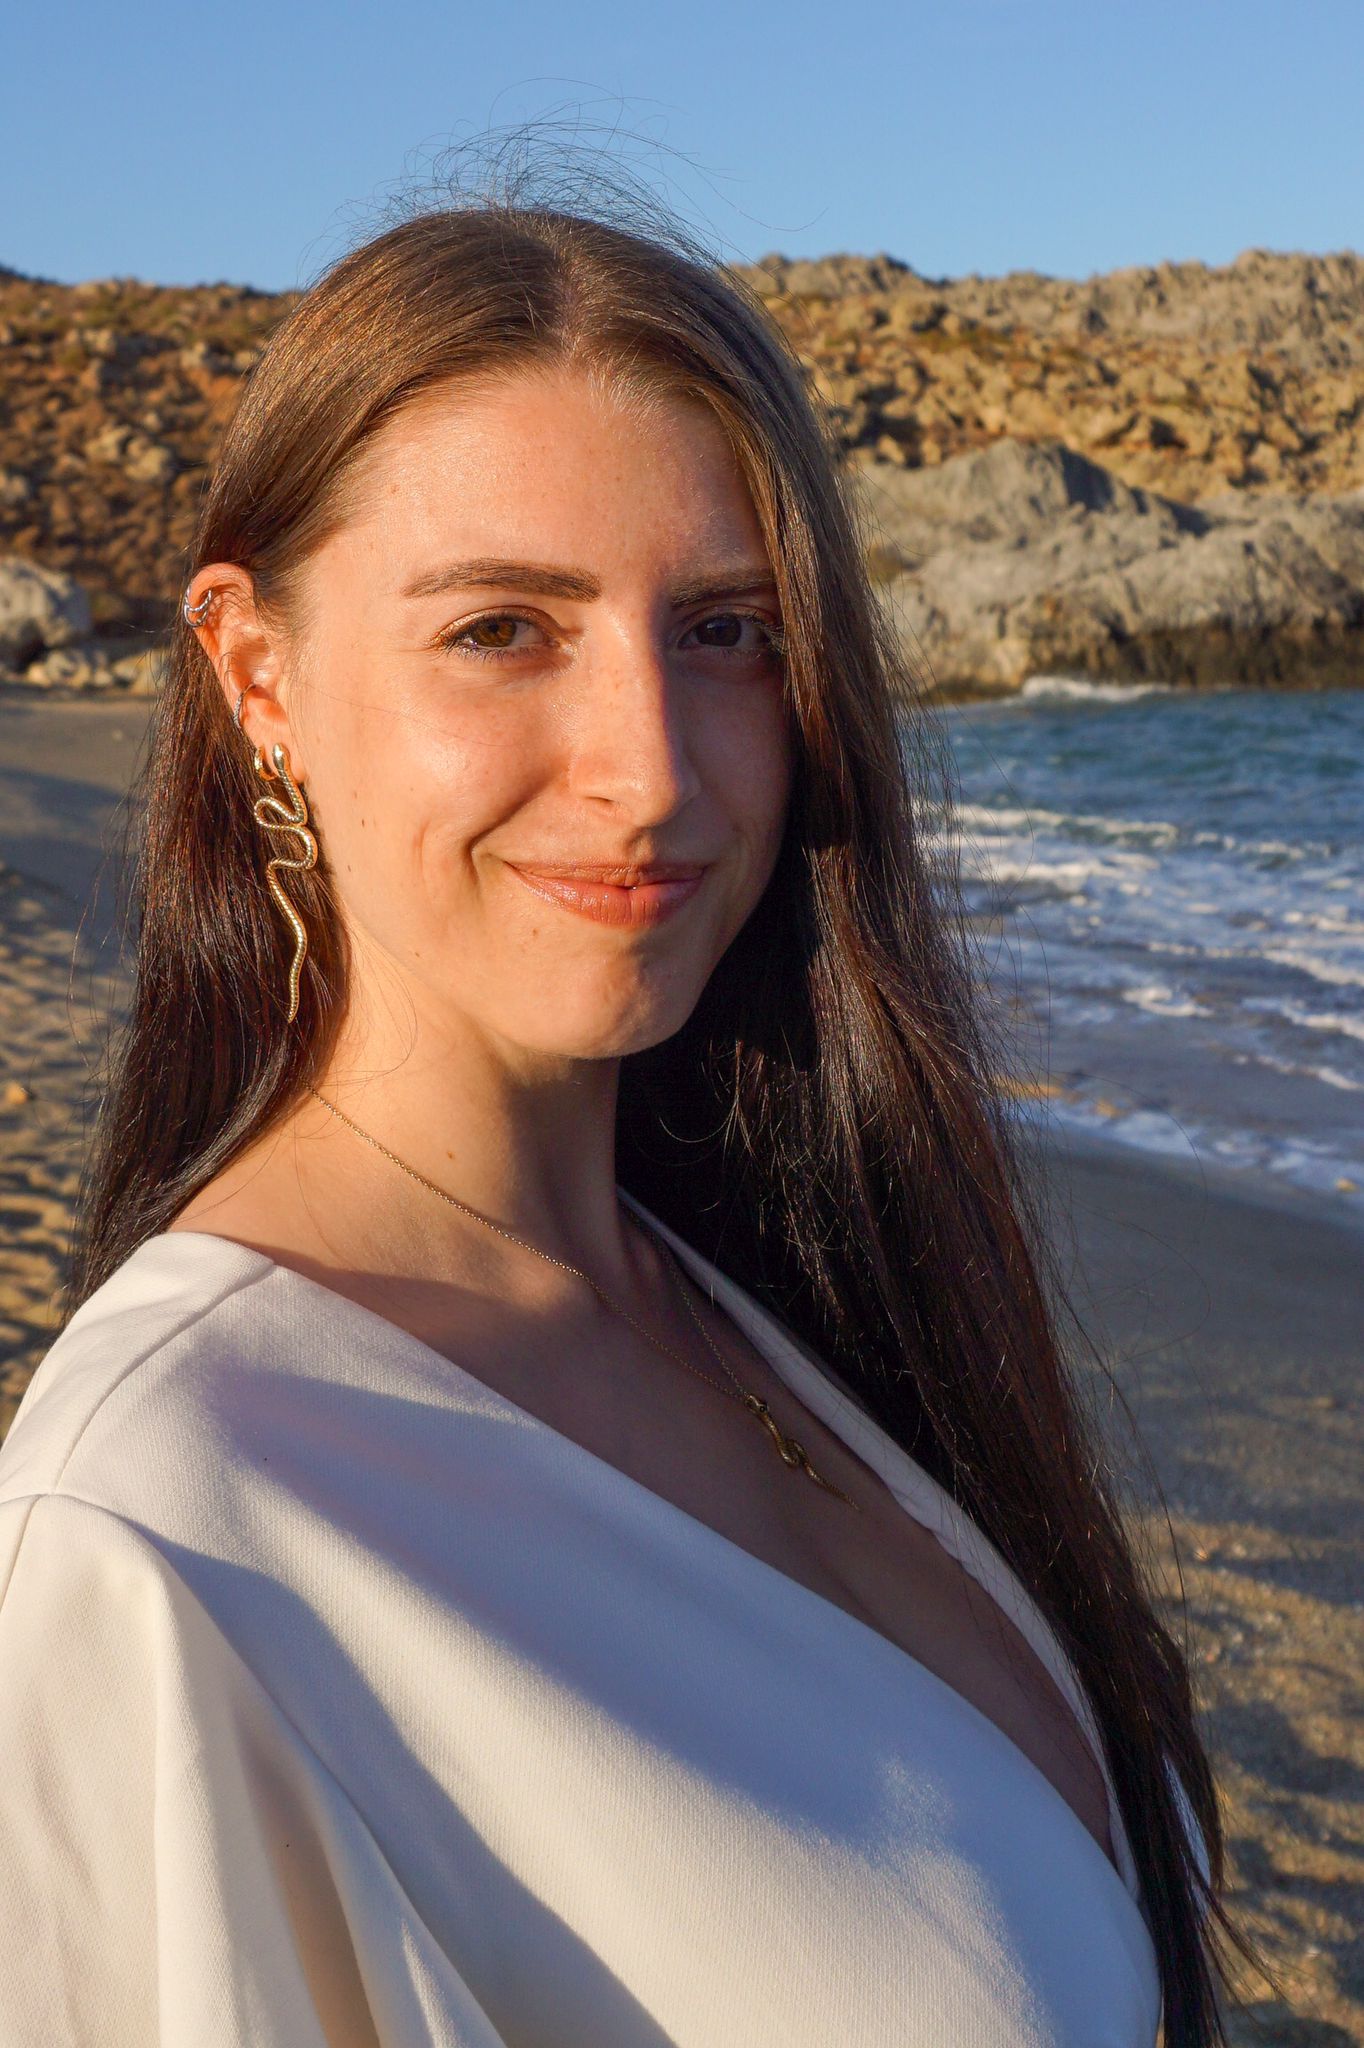 Portrait of Anki at the beach